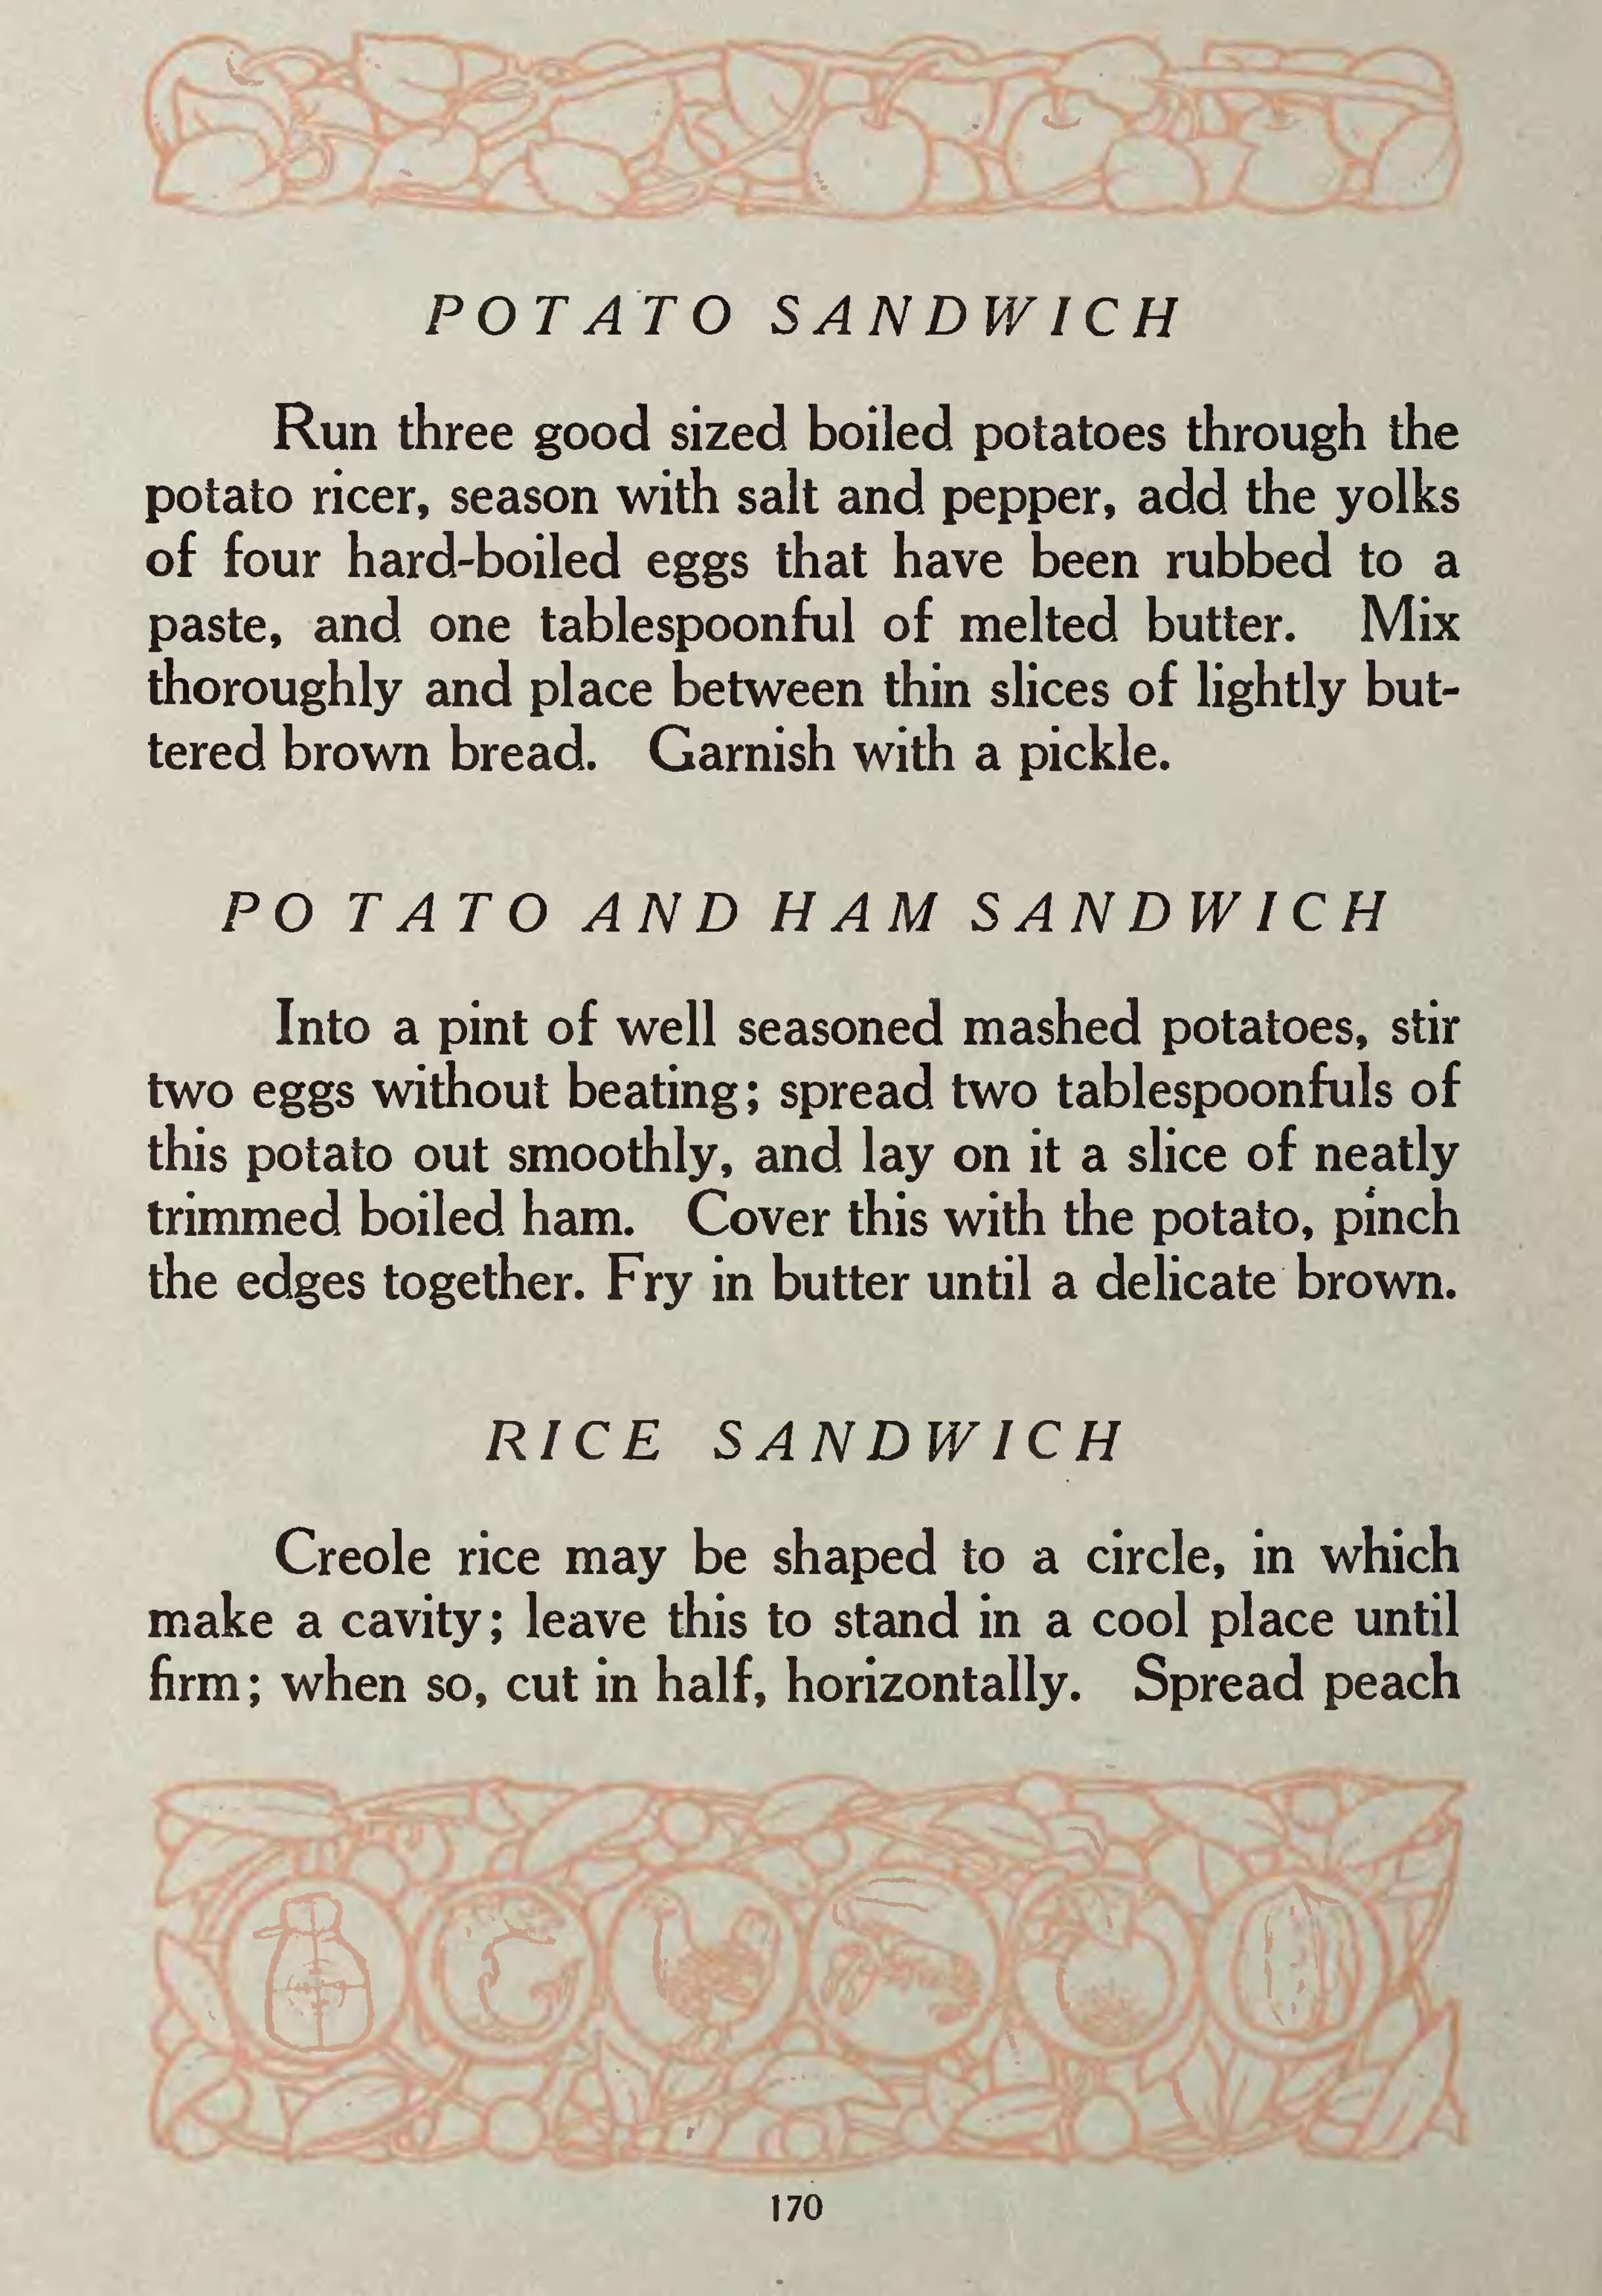 Potato ricer - Wikipedia